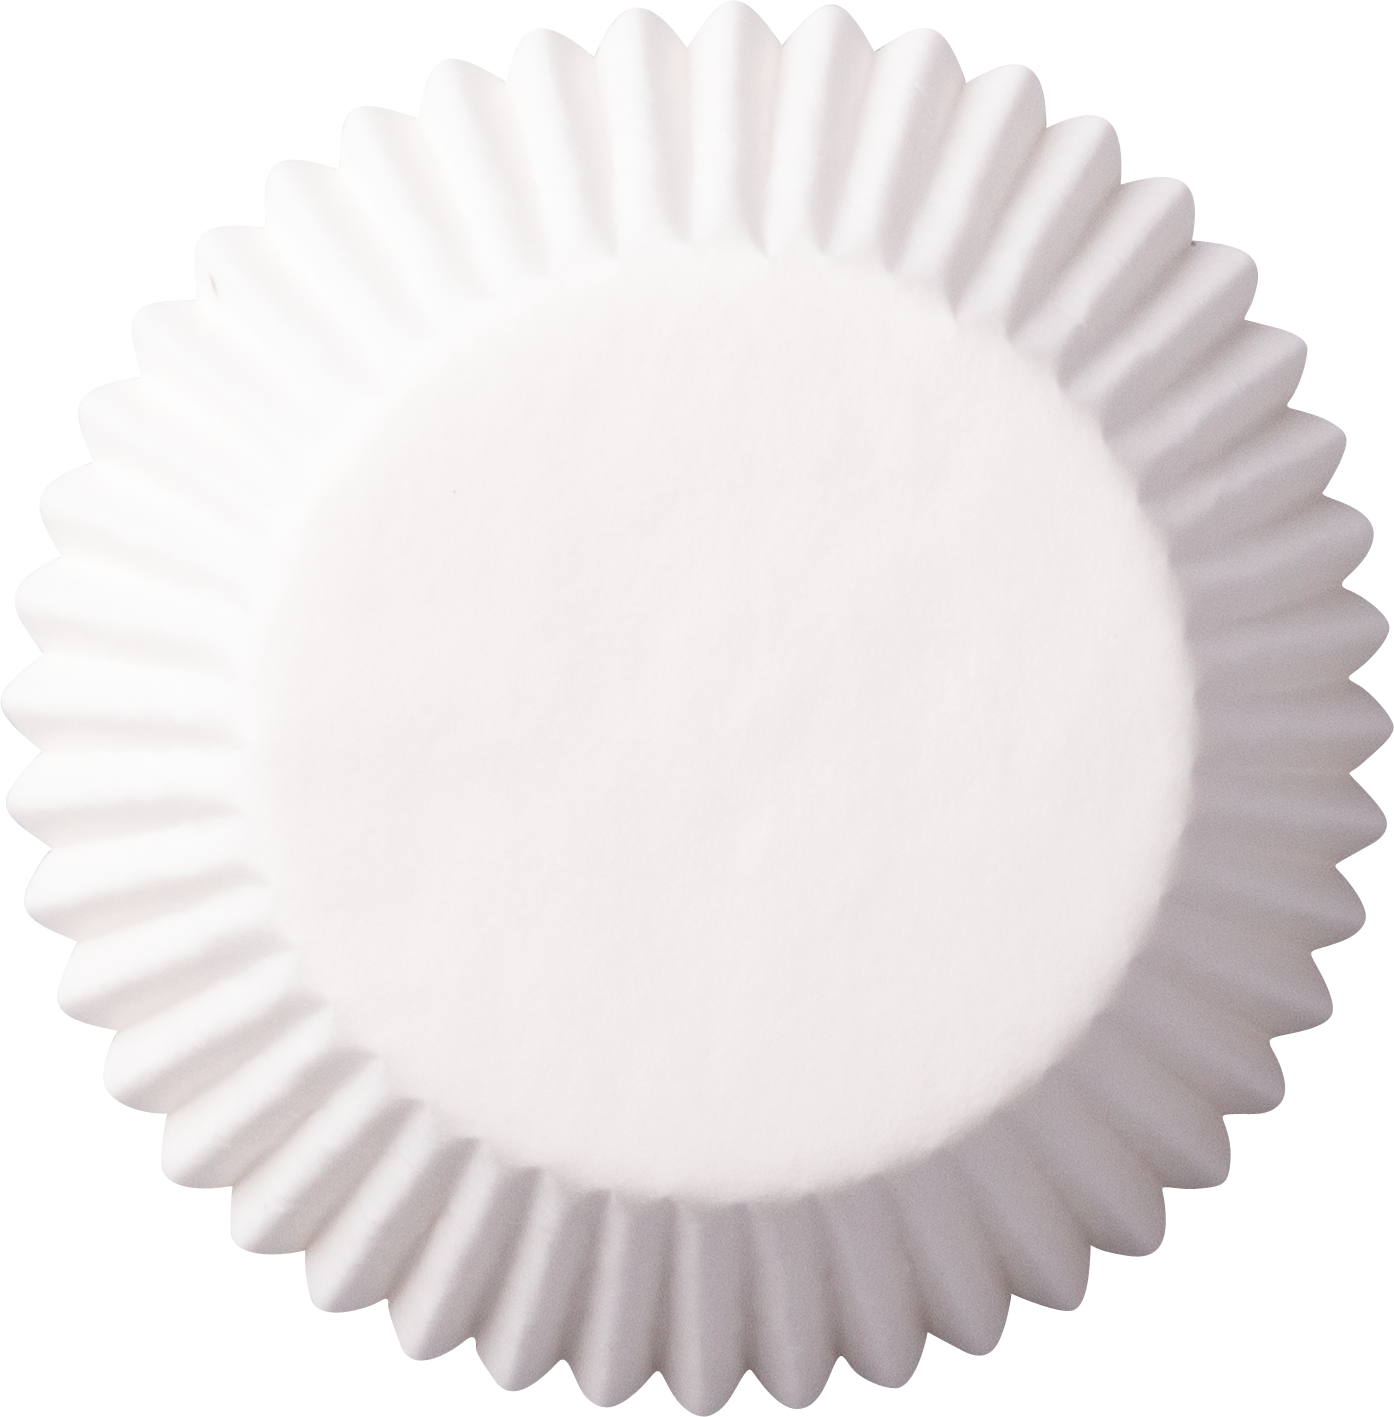 Baking cup white, 4,5 x 2,5 cm 